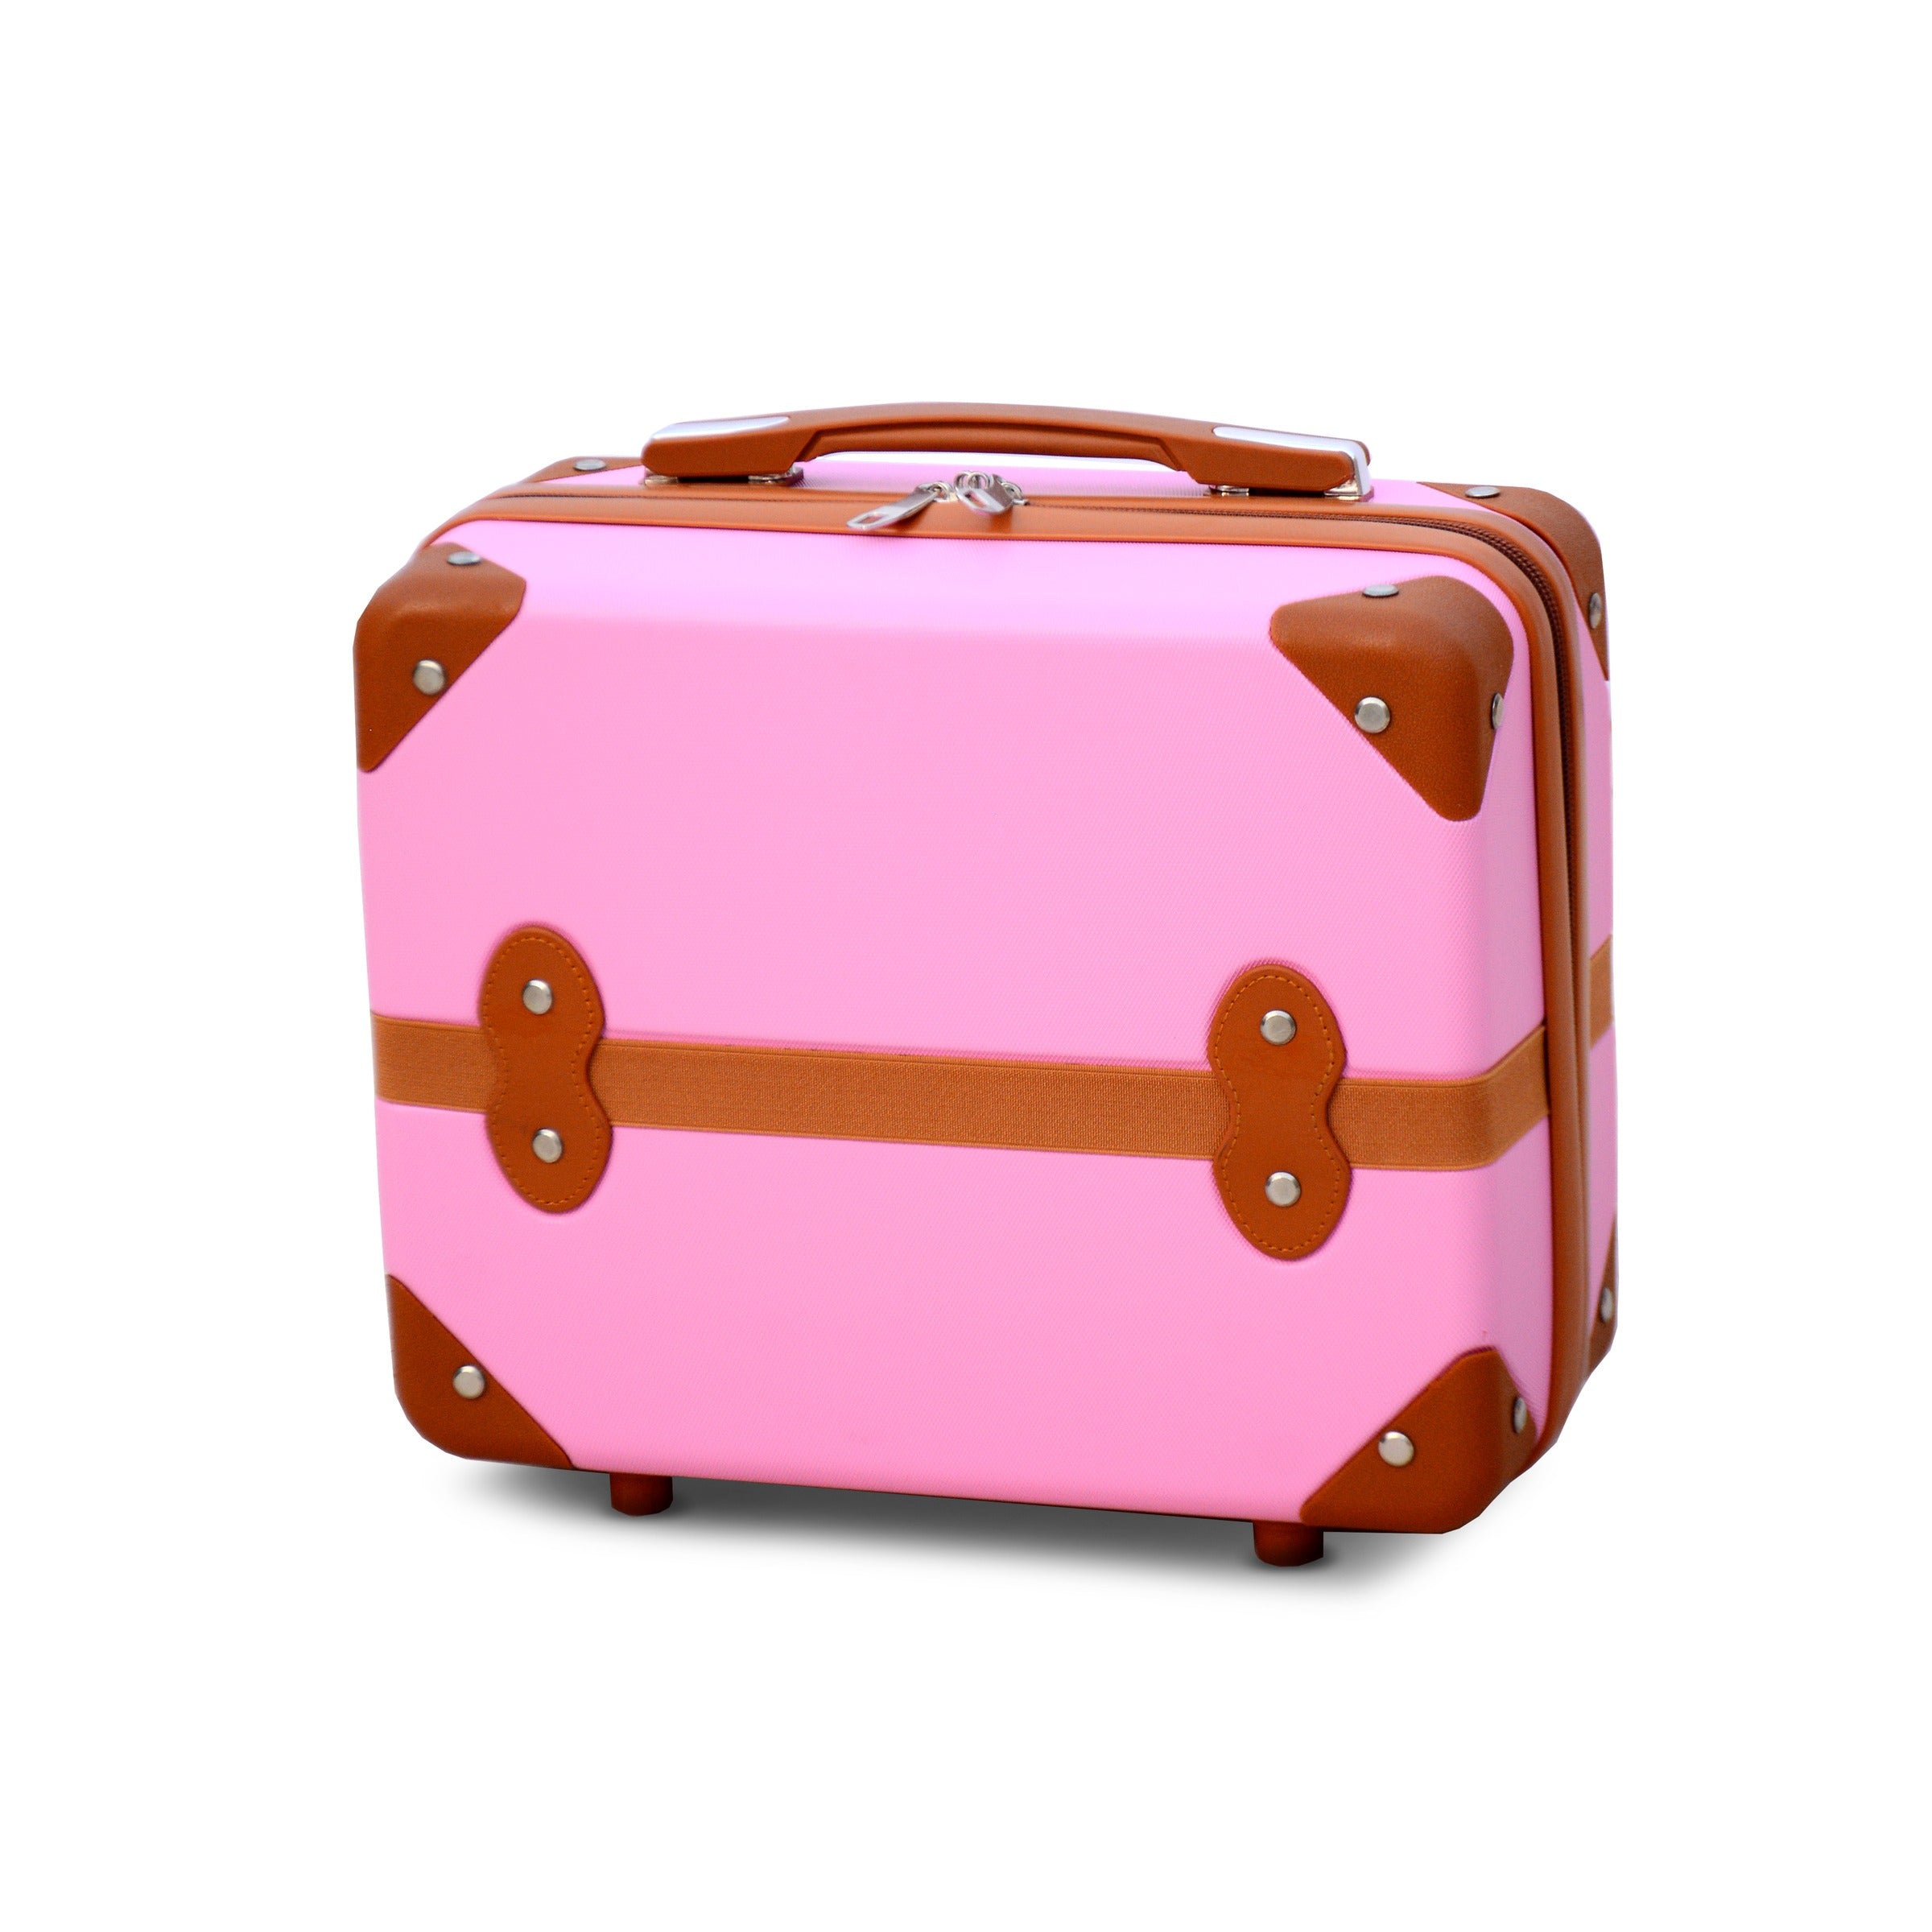 Corner Guard Lightweight ABS Beauty Case | Pink Colour Cosmetics Box | 2 Year Warranty